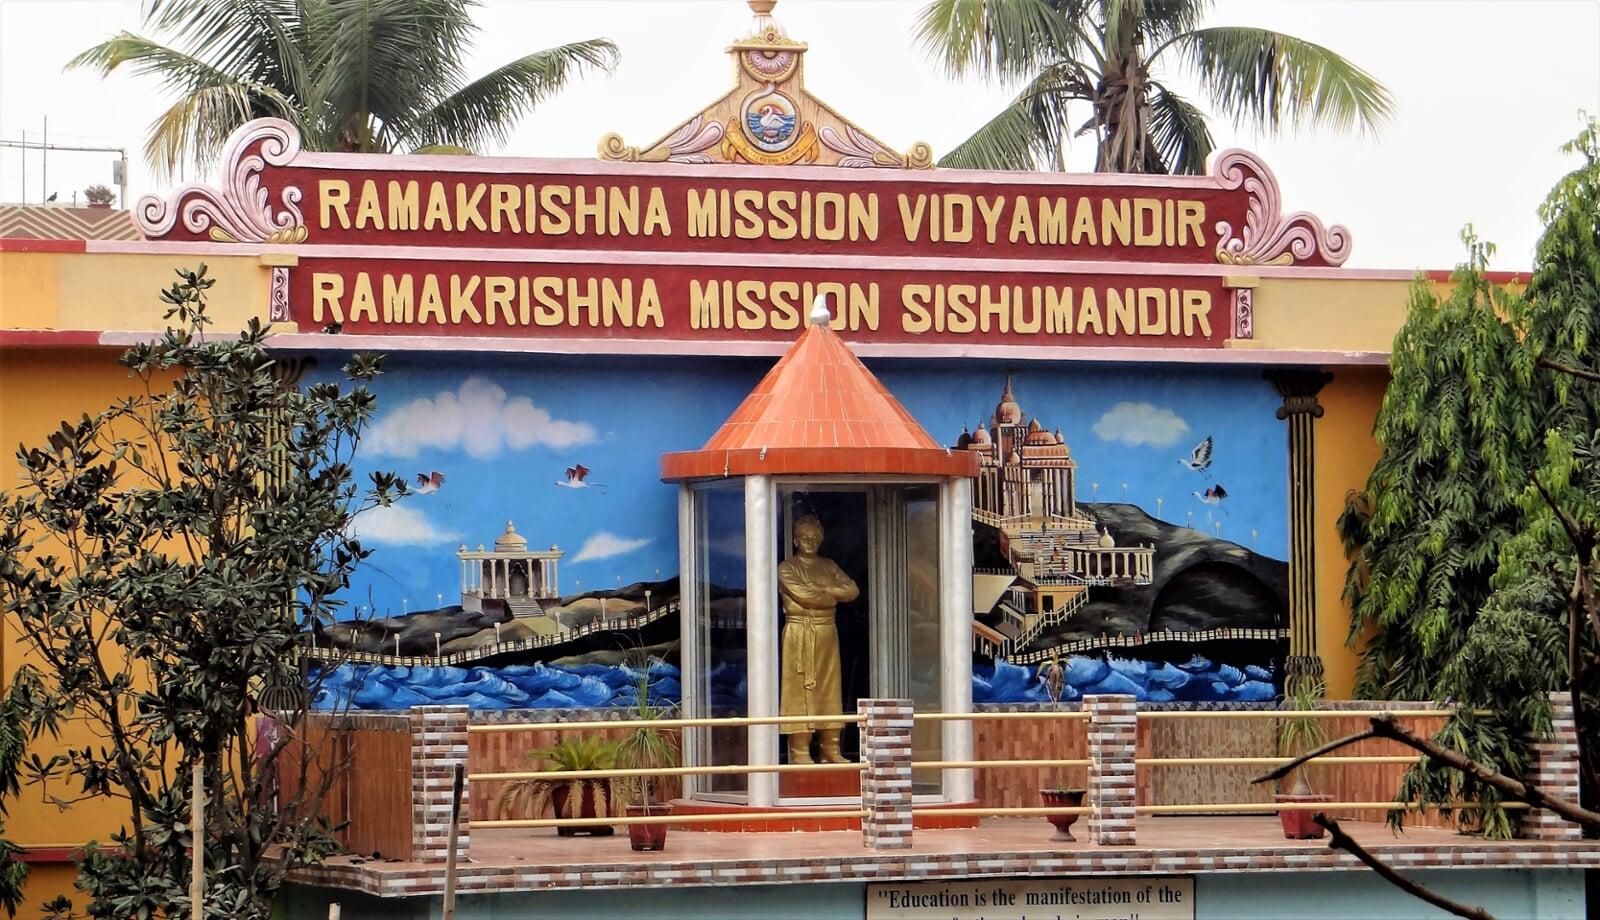 Ramakrishna Mission Vidyamandir 